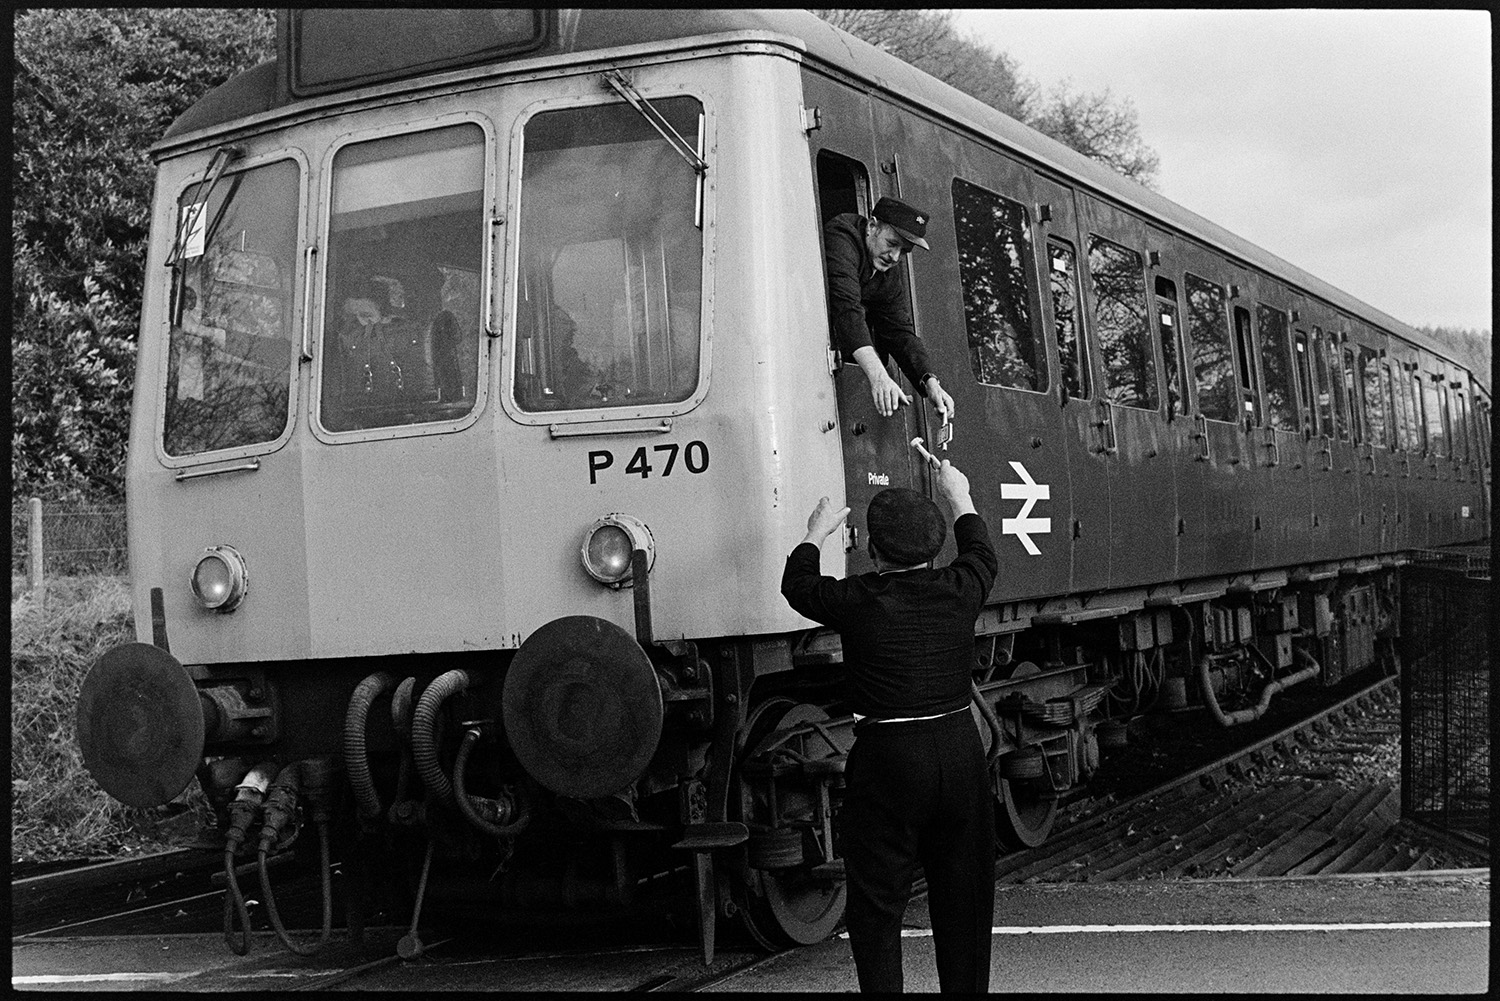 Signal box, signalman operating equipment and handing baton to train driver. 
[Jimmy Hughes handing a baton to a train driver leaning out of a train window at Eggesford Station.]